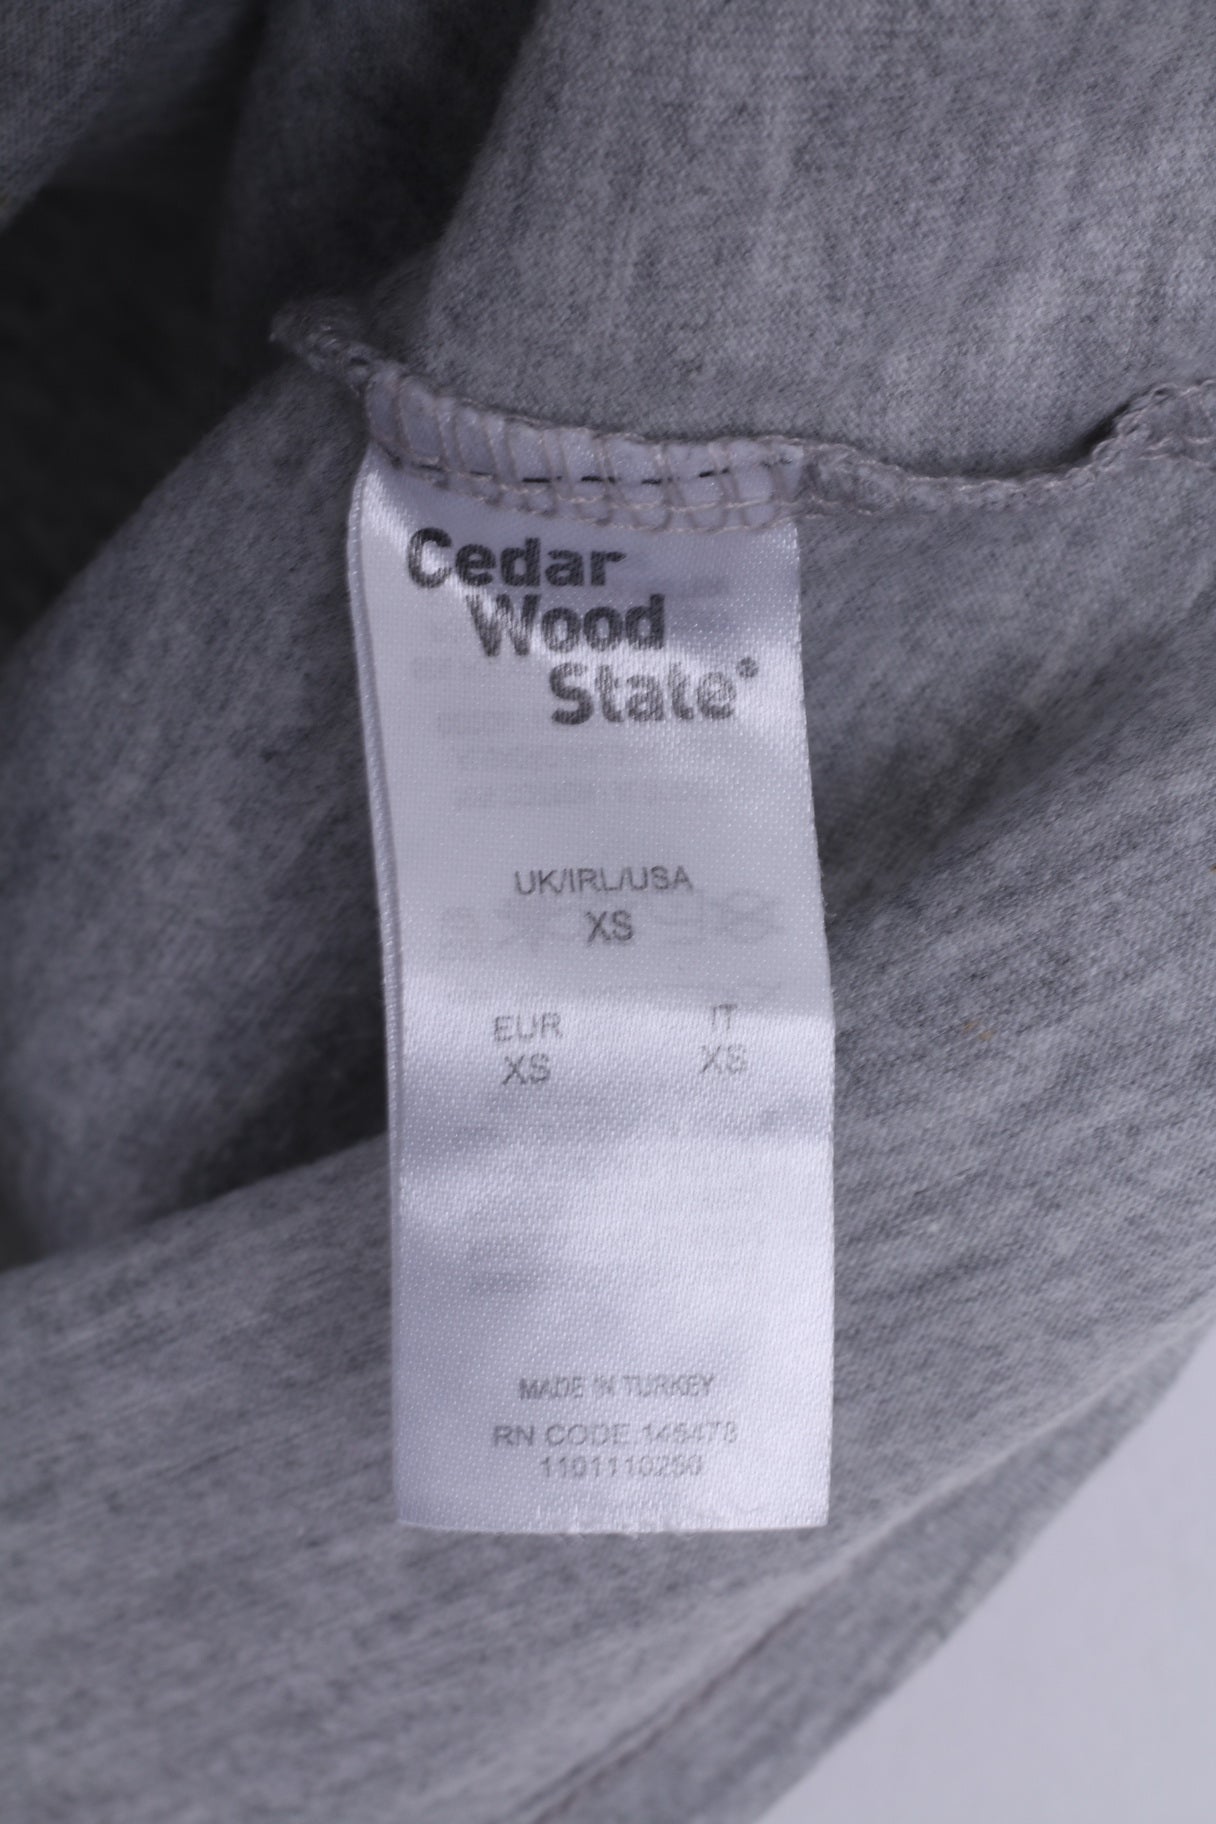 Cedar Wood State Mens Xs Graphic Shirt Batman Cotton